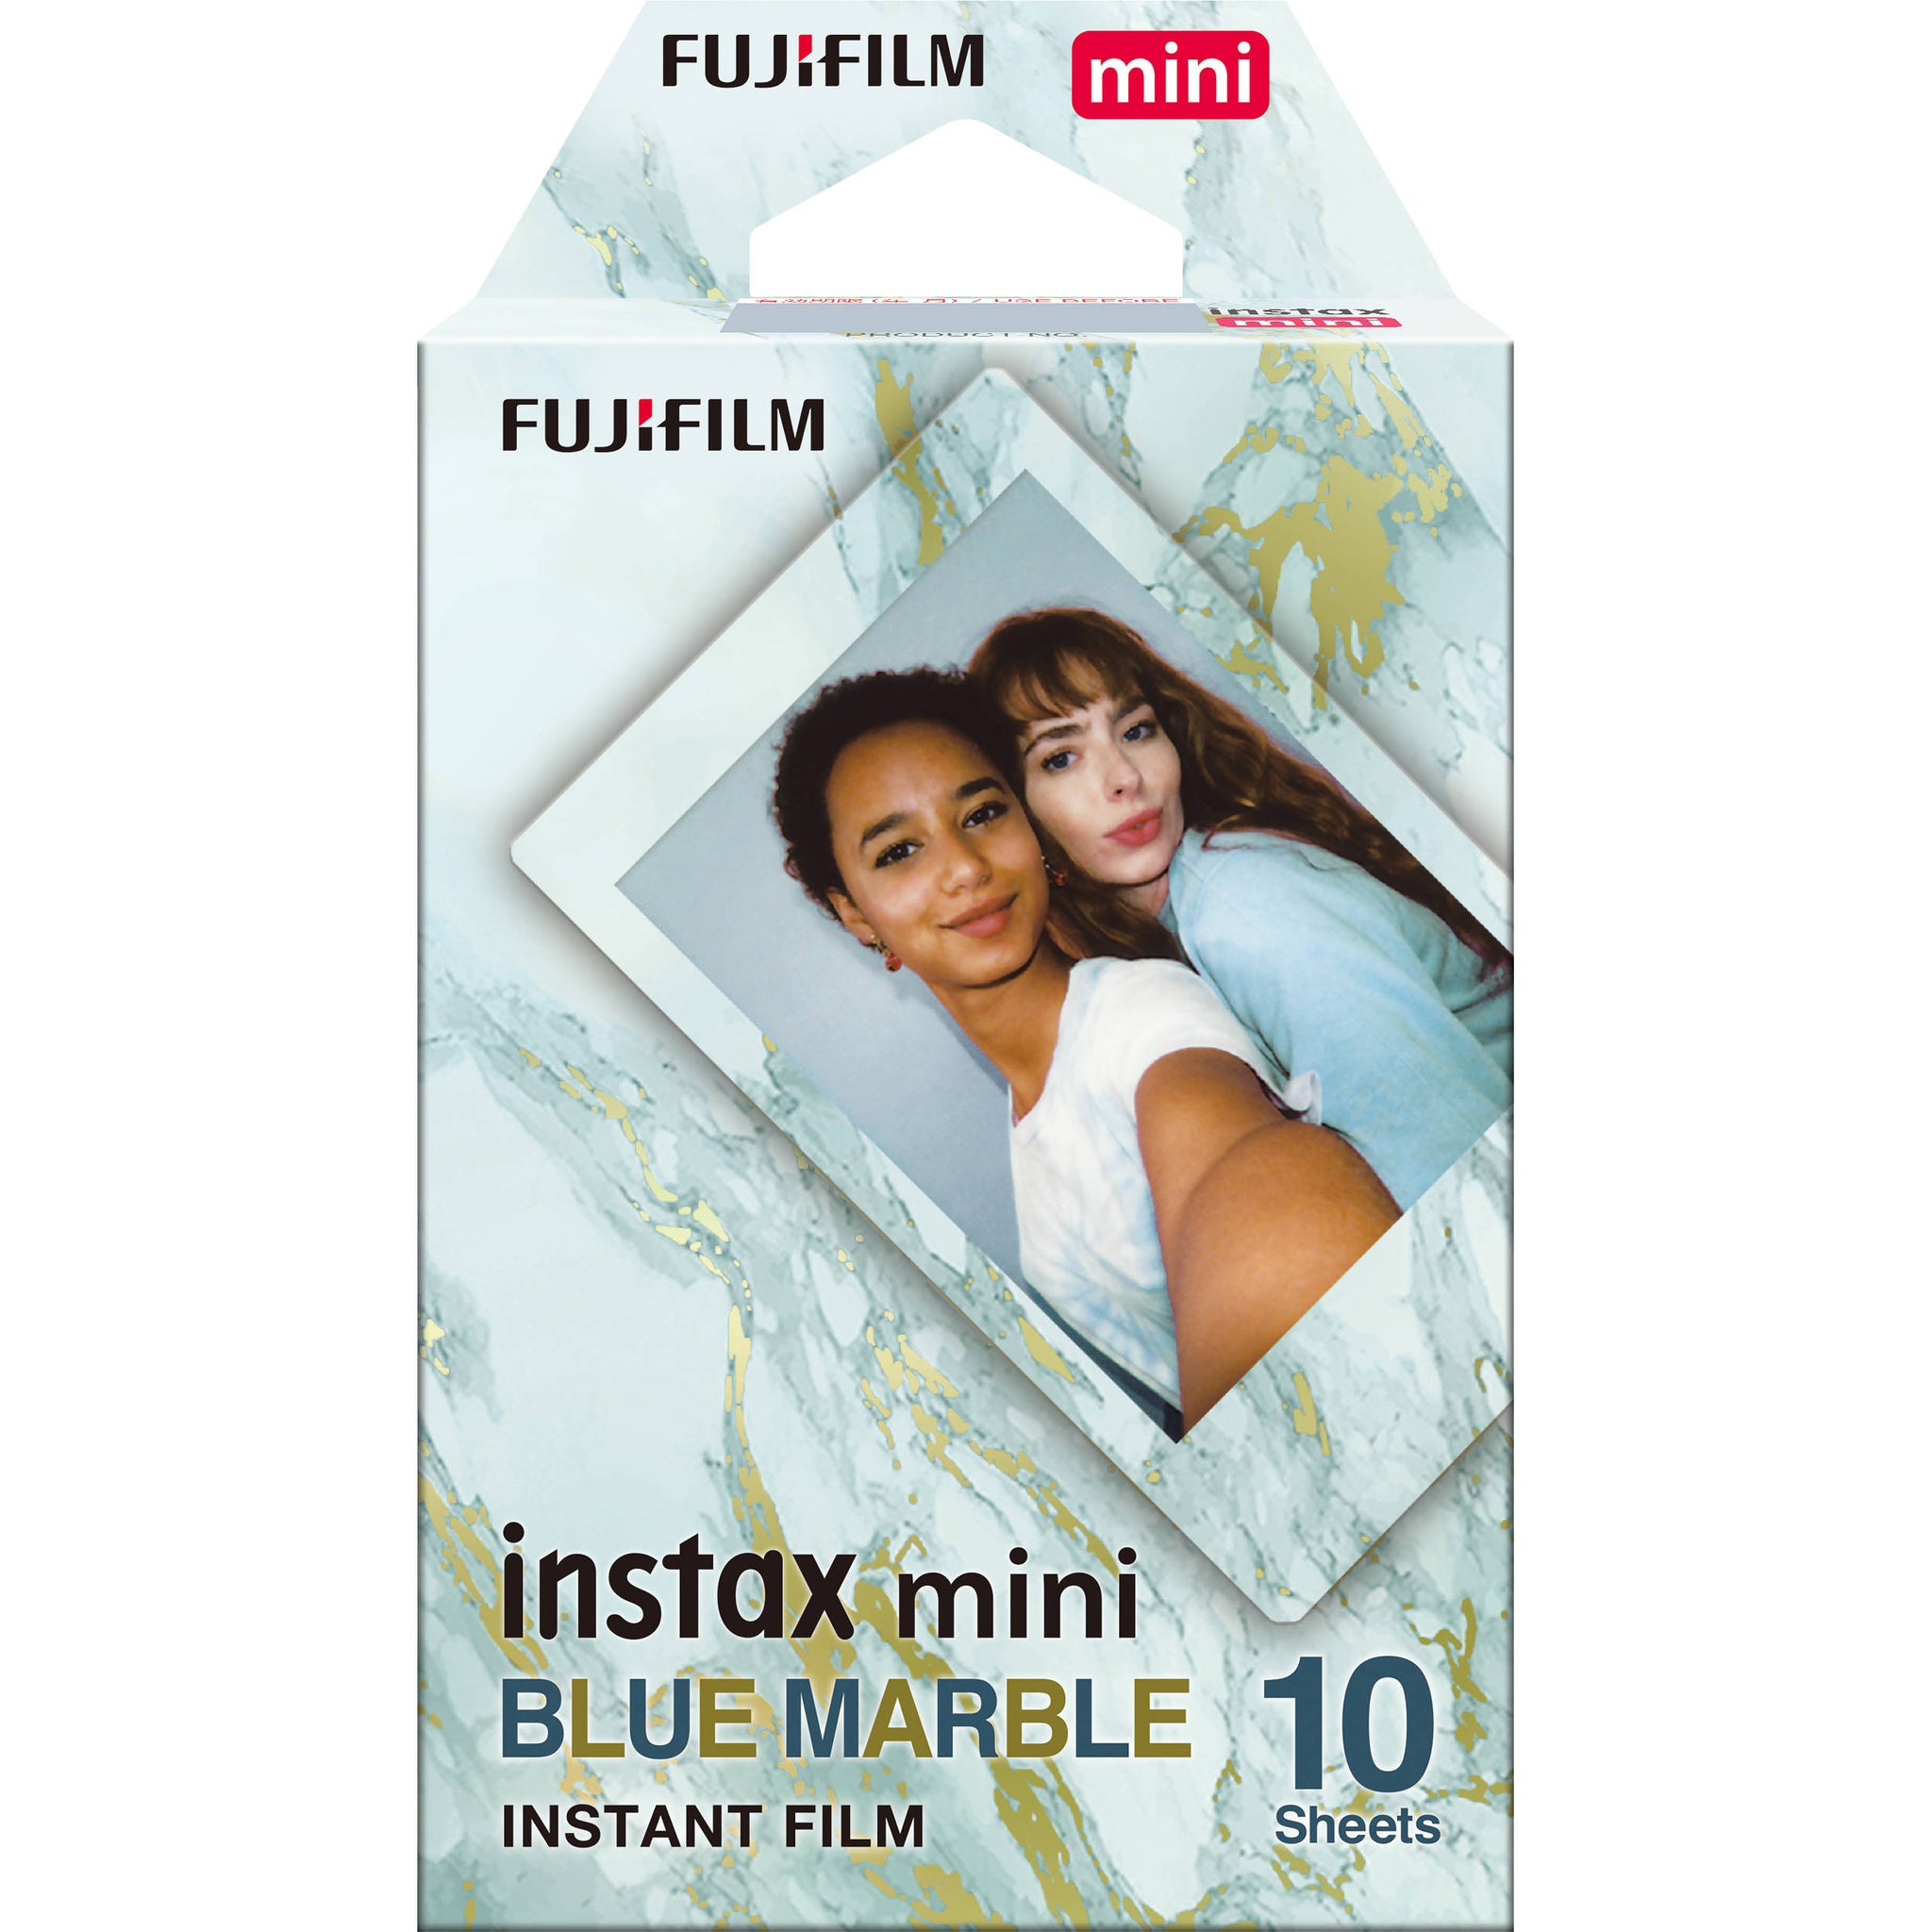 Fujifilm Instax Mini 10X1 blue marble Instant Film with Instax Time Photo Album 64 Sheets (Orange)